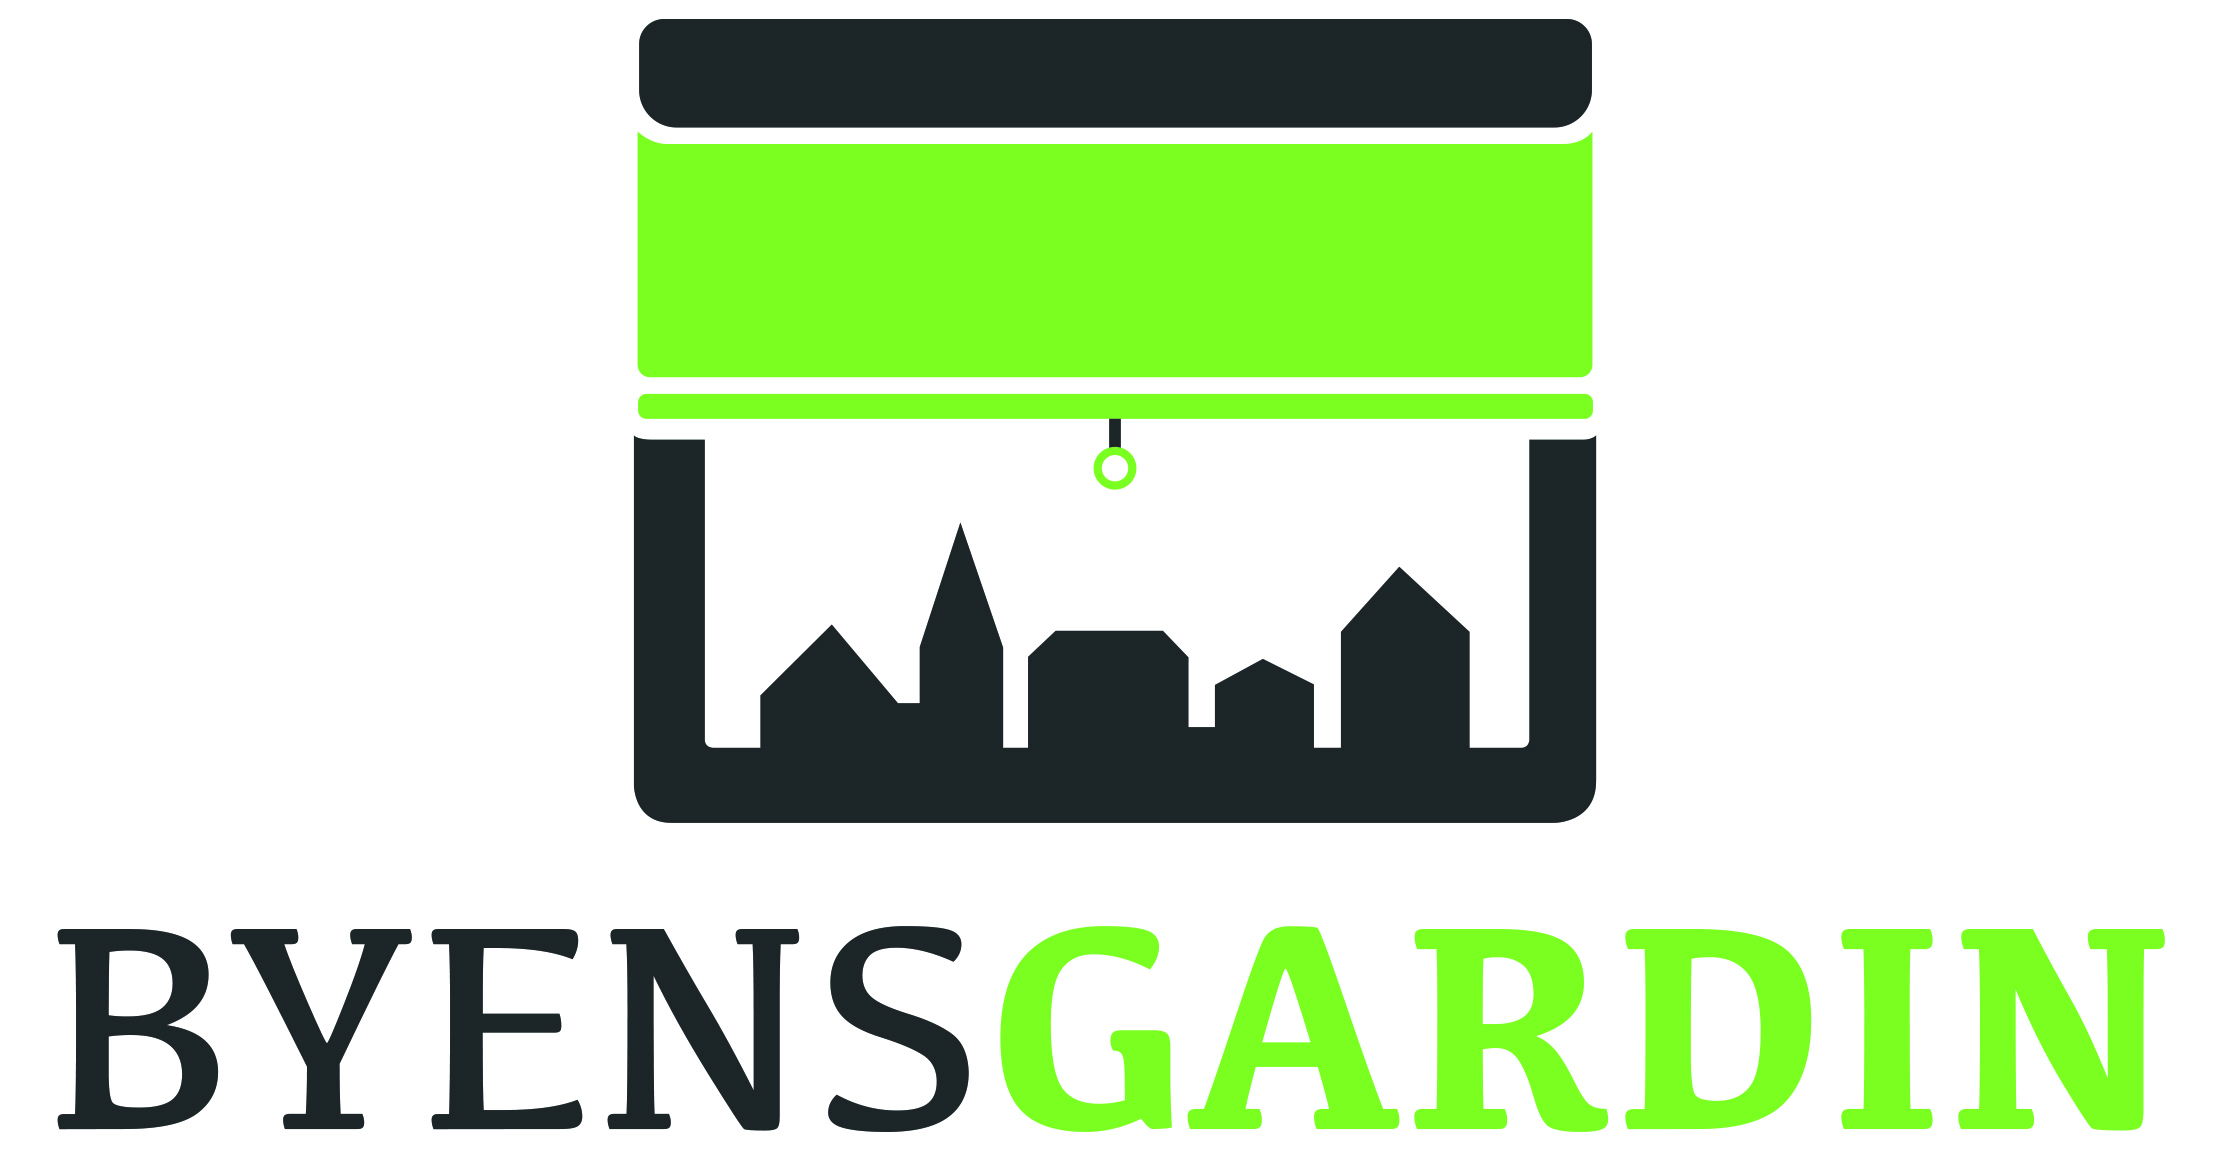 Byens-gardin-logo-final